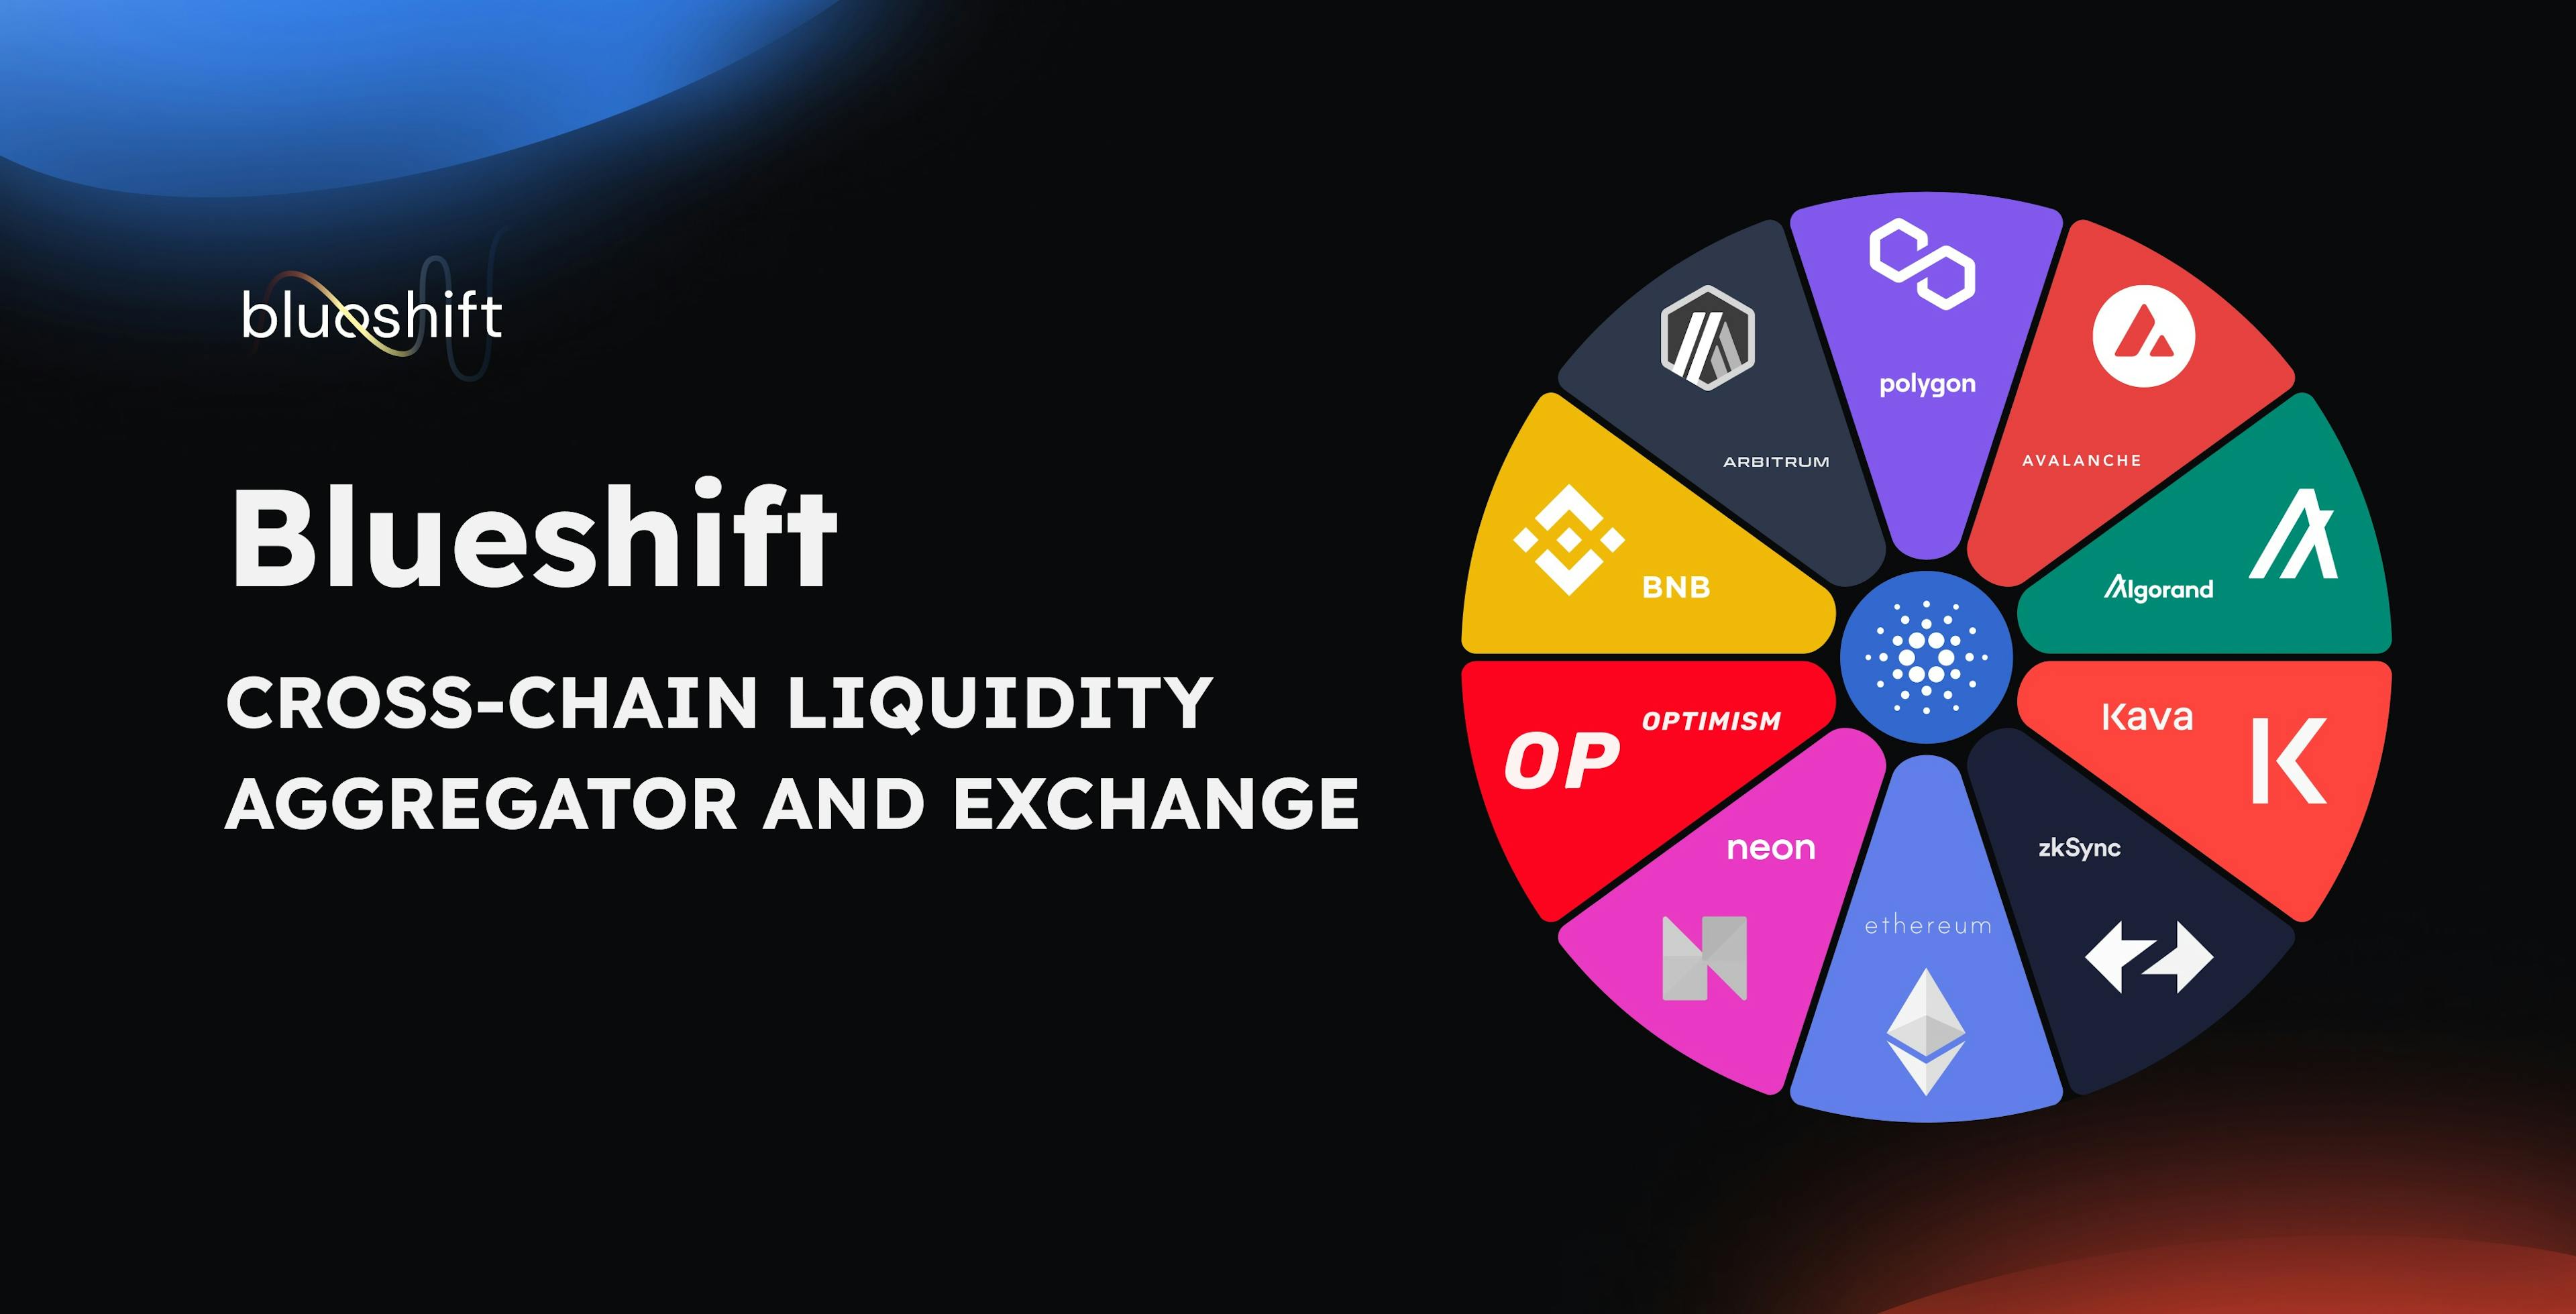 A Revolutionary Cross-chain Portfolio-Based Liquidity Aggregator & Exchange for the Crypto World